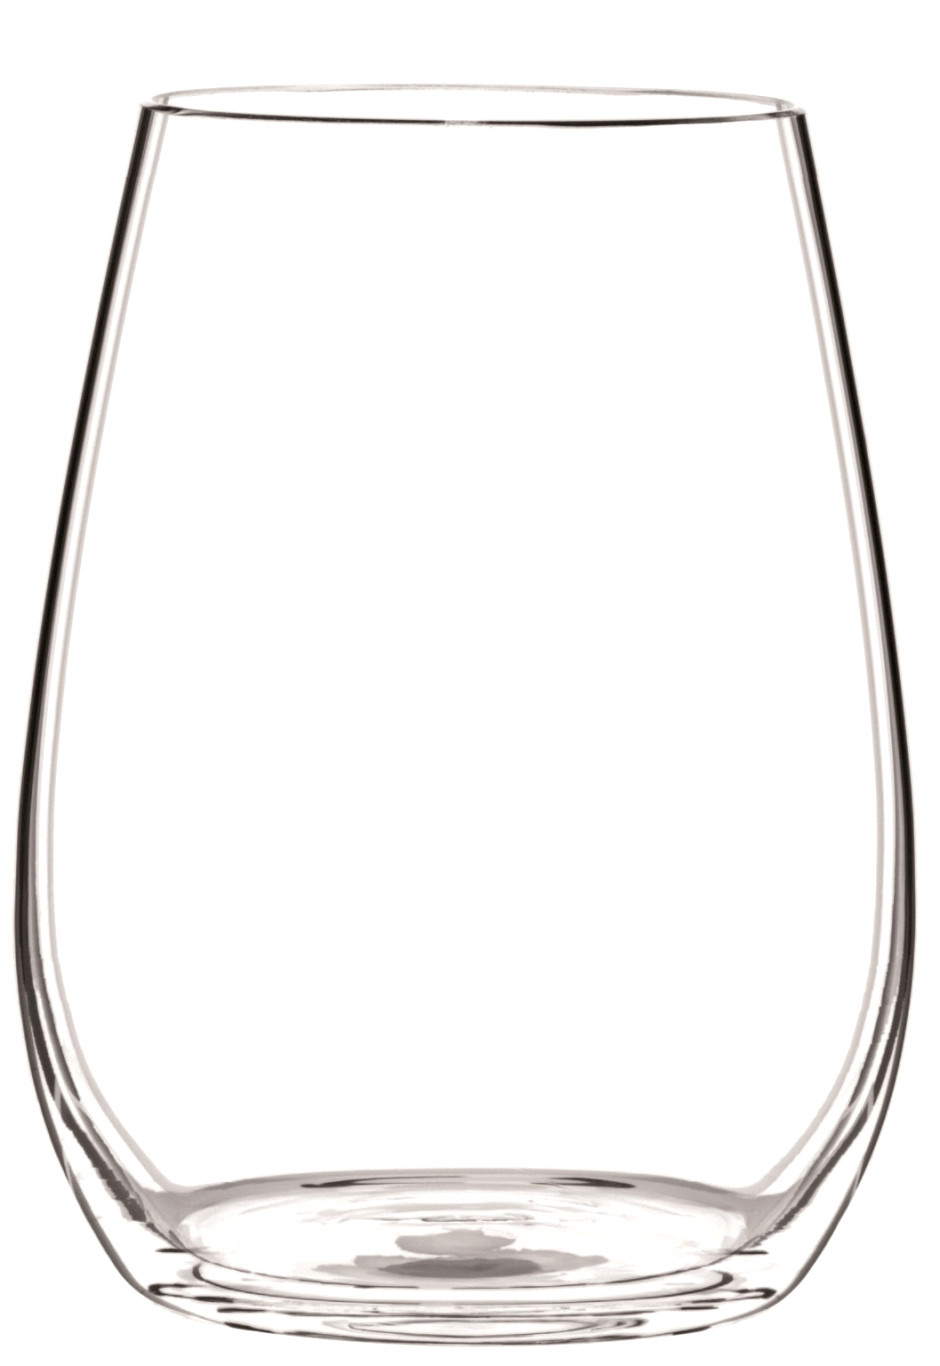 2 бокала для крепких напитков Riedel O Spirits 235 мл (арт. 0414/60)